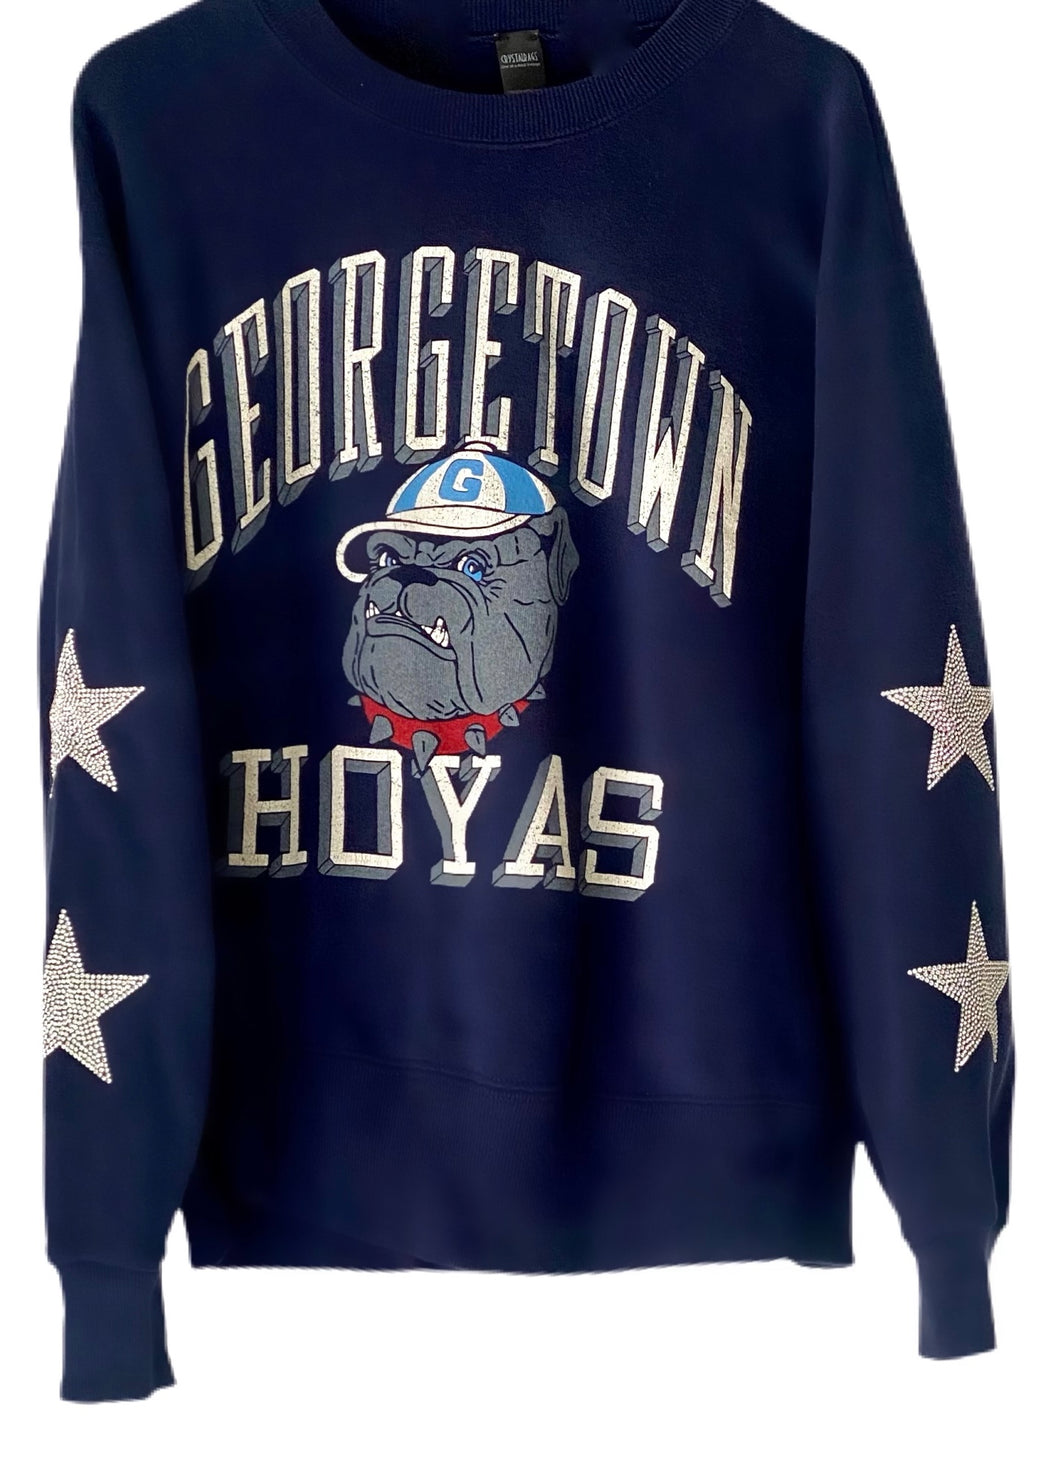 Georgetown University, One of a KIND Vintage Sweatshirt with Crystal Star Design